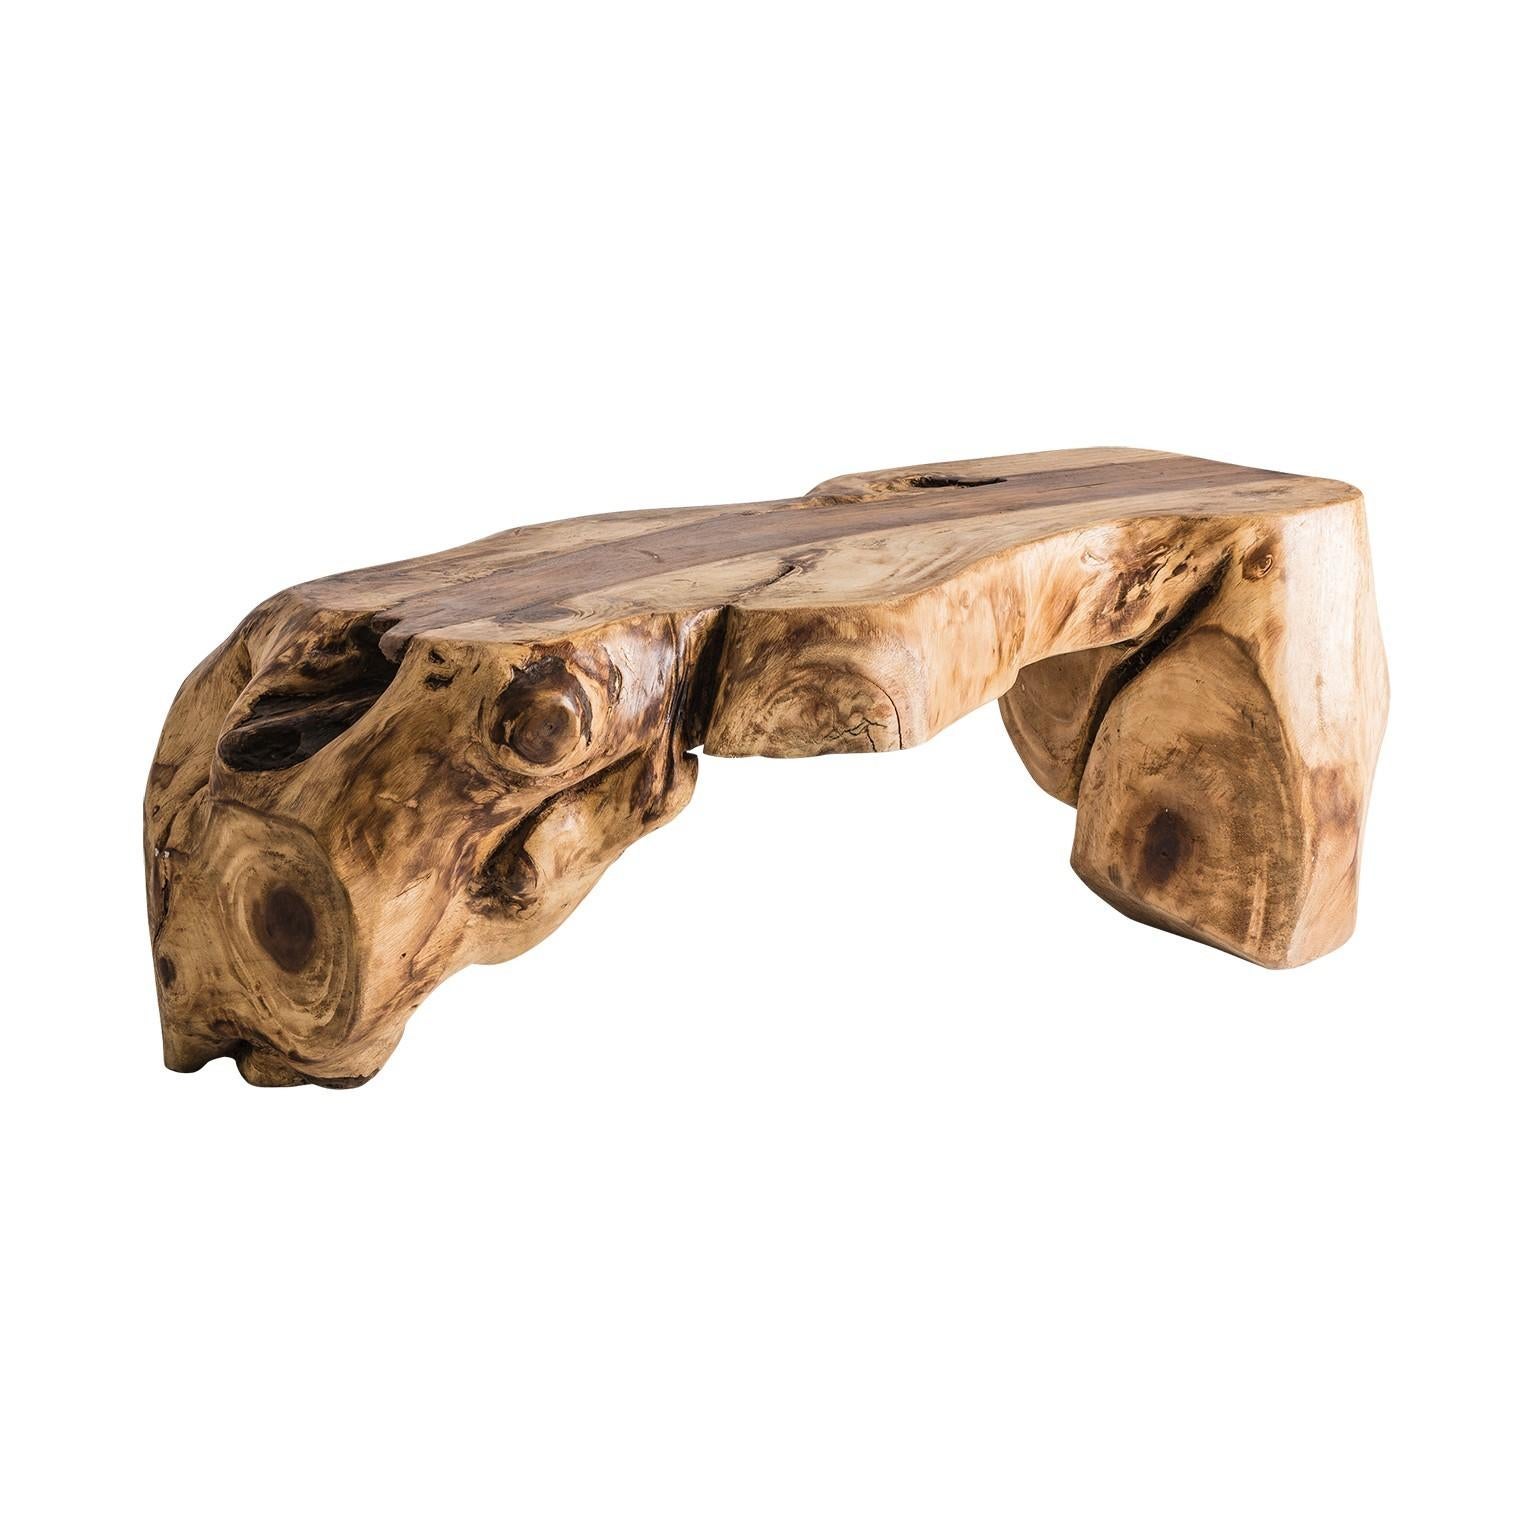 Solid wood bench organic design.